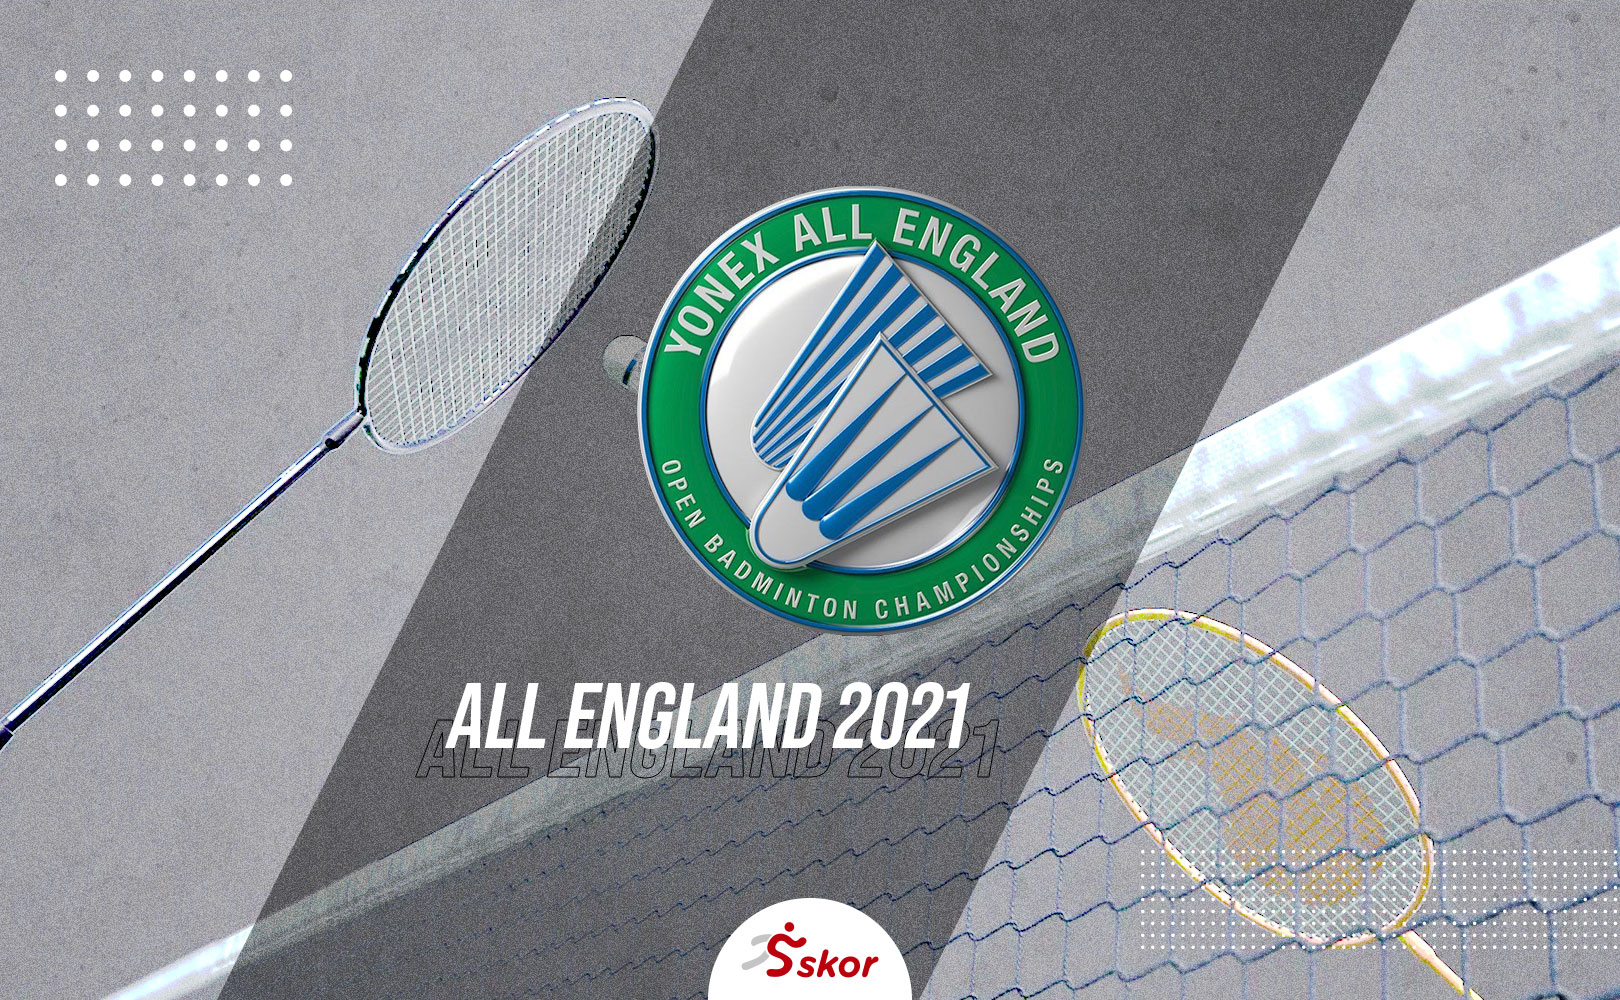 BREAKING NEWS: Semua Pemain Negatif Covid-19, All England 2021 Digelar Malam Ini